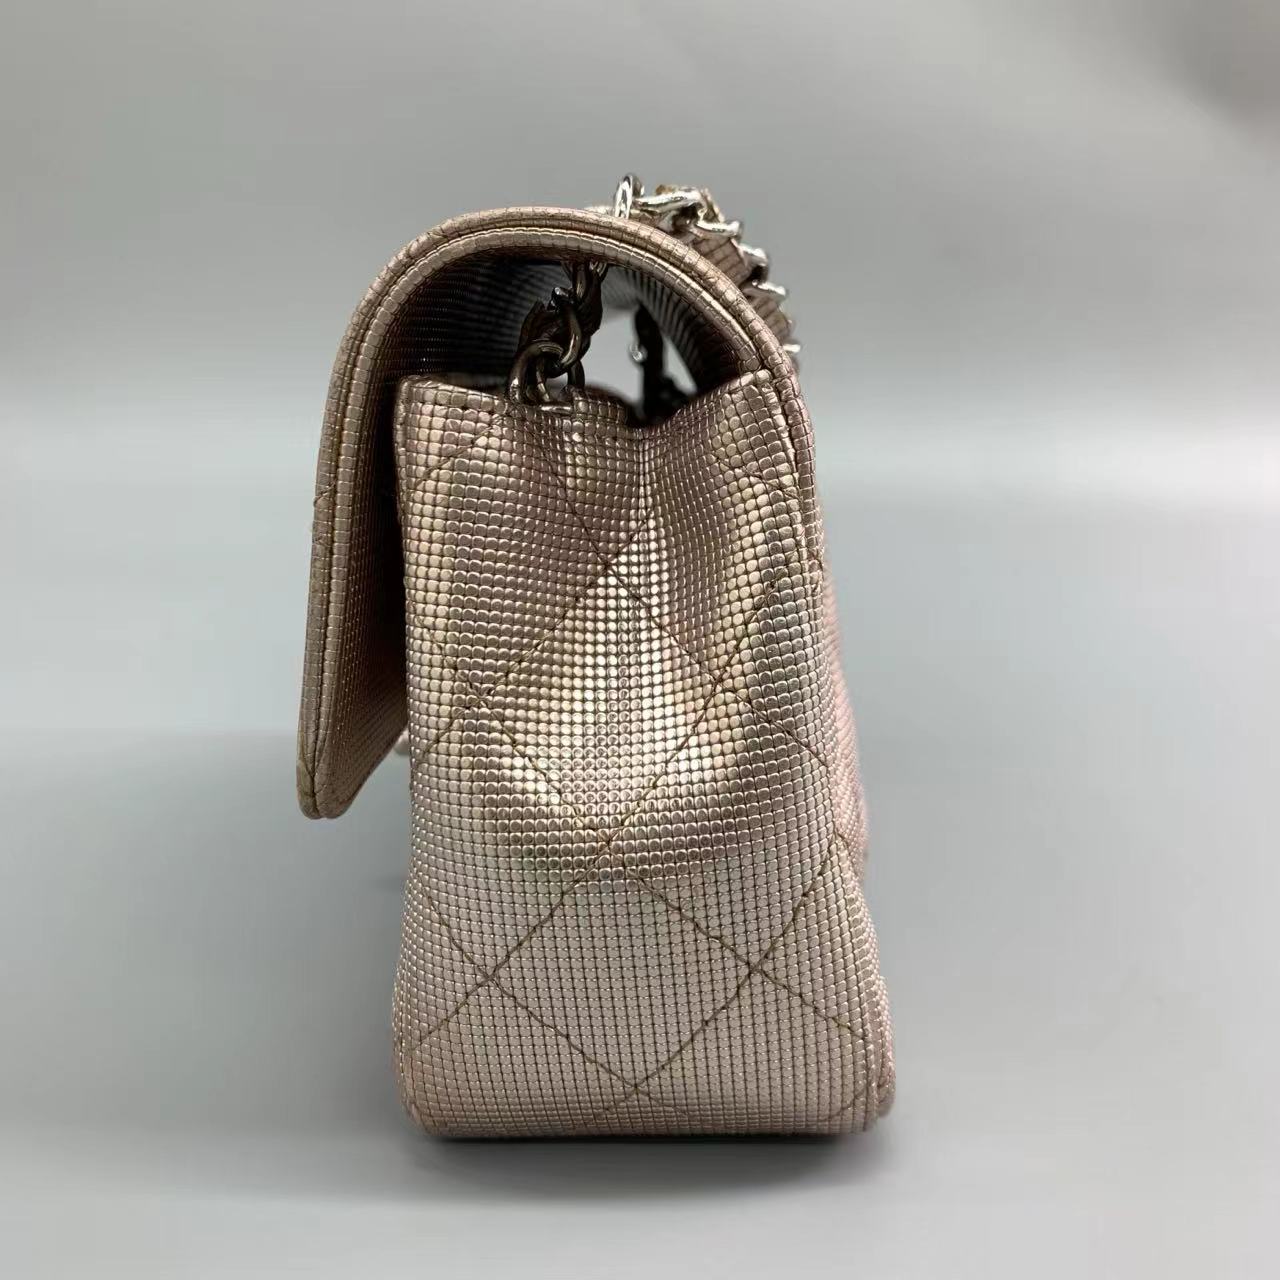 Chanel Classic Flap 2016 Pink Metallic Pixel Effect Calfskin Leather Mini Crossbody Bag